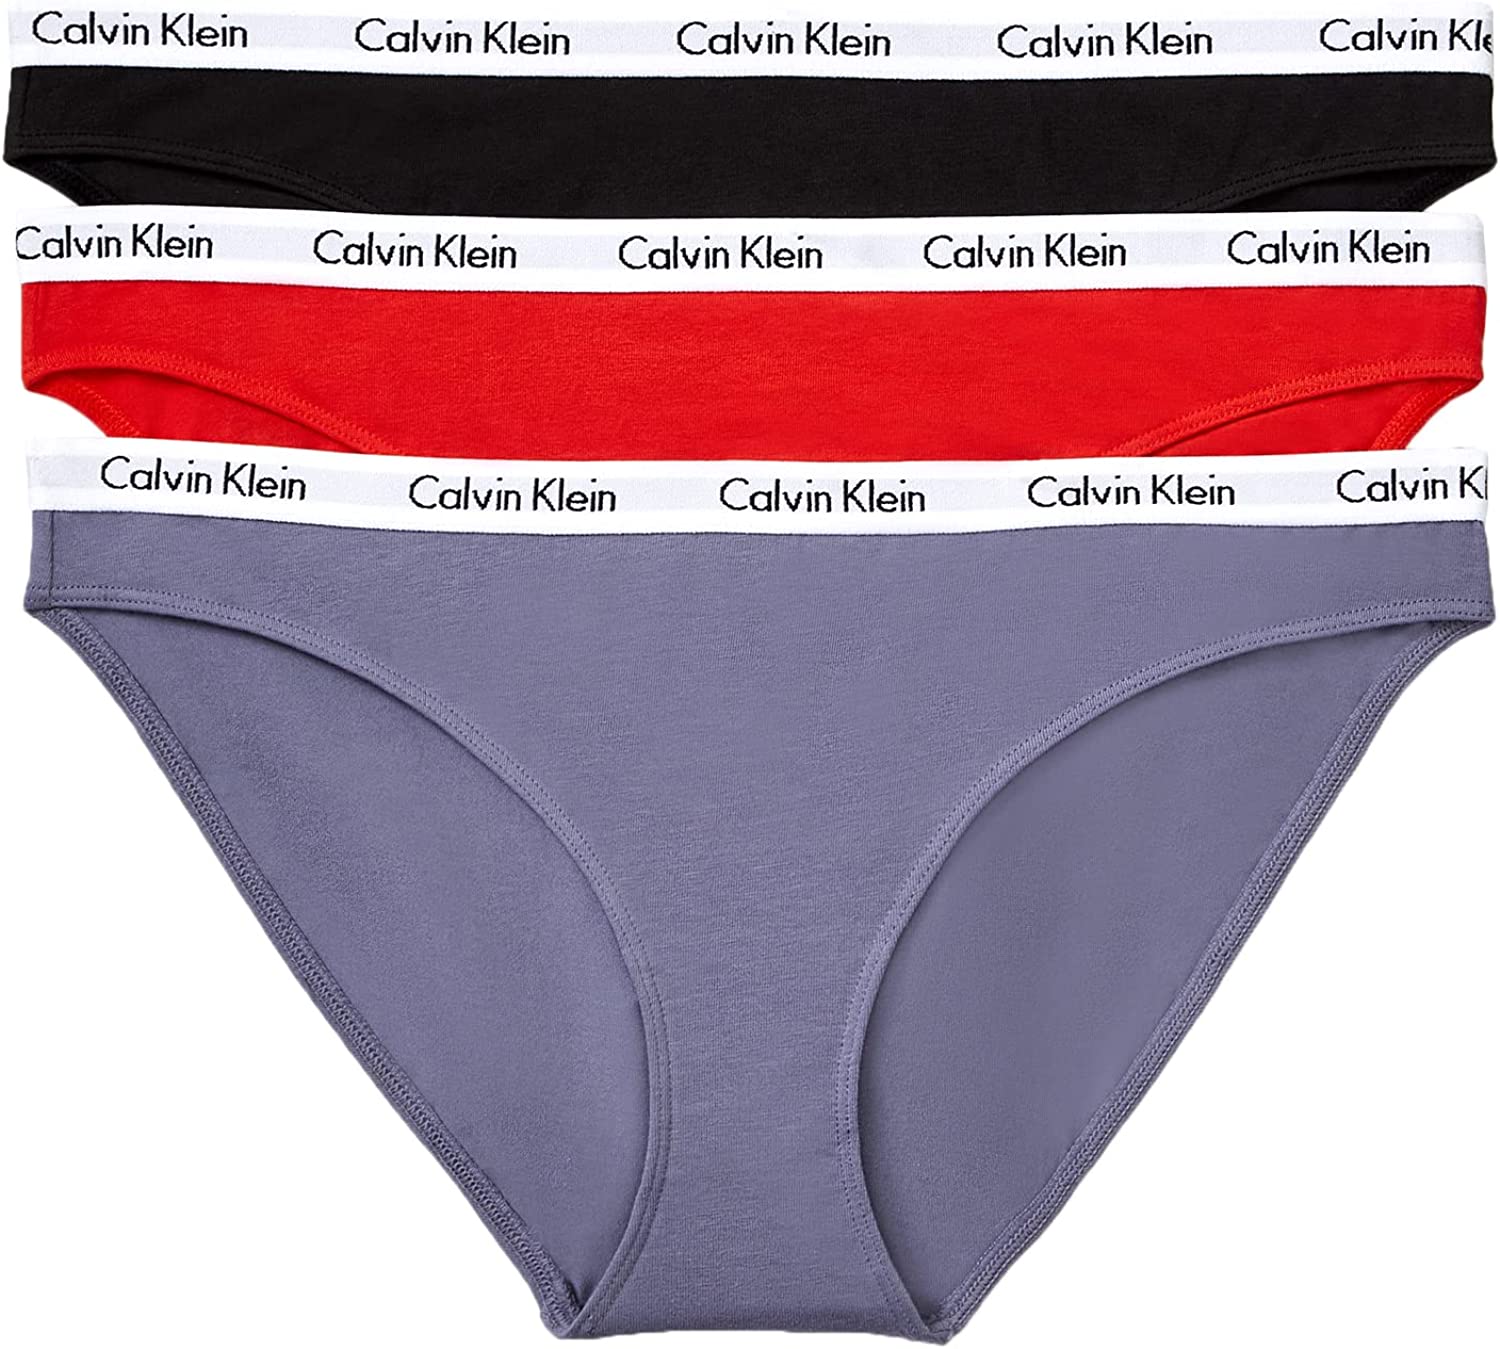 Calvin Klein Ladies Modern Brief (S Size) 3pcs – LMCHING Group Limited